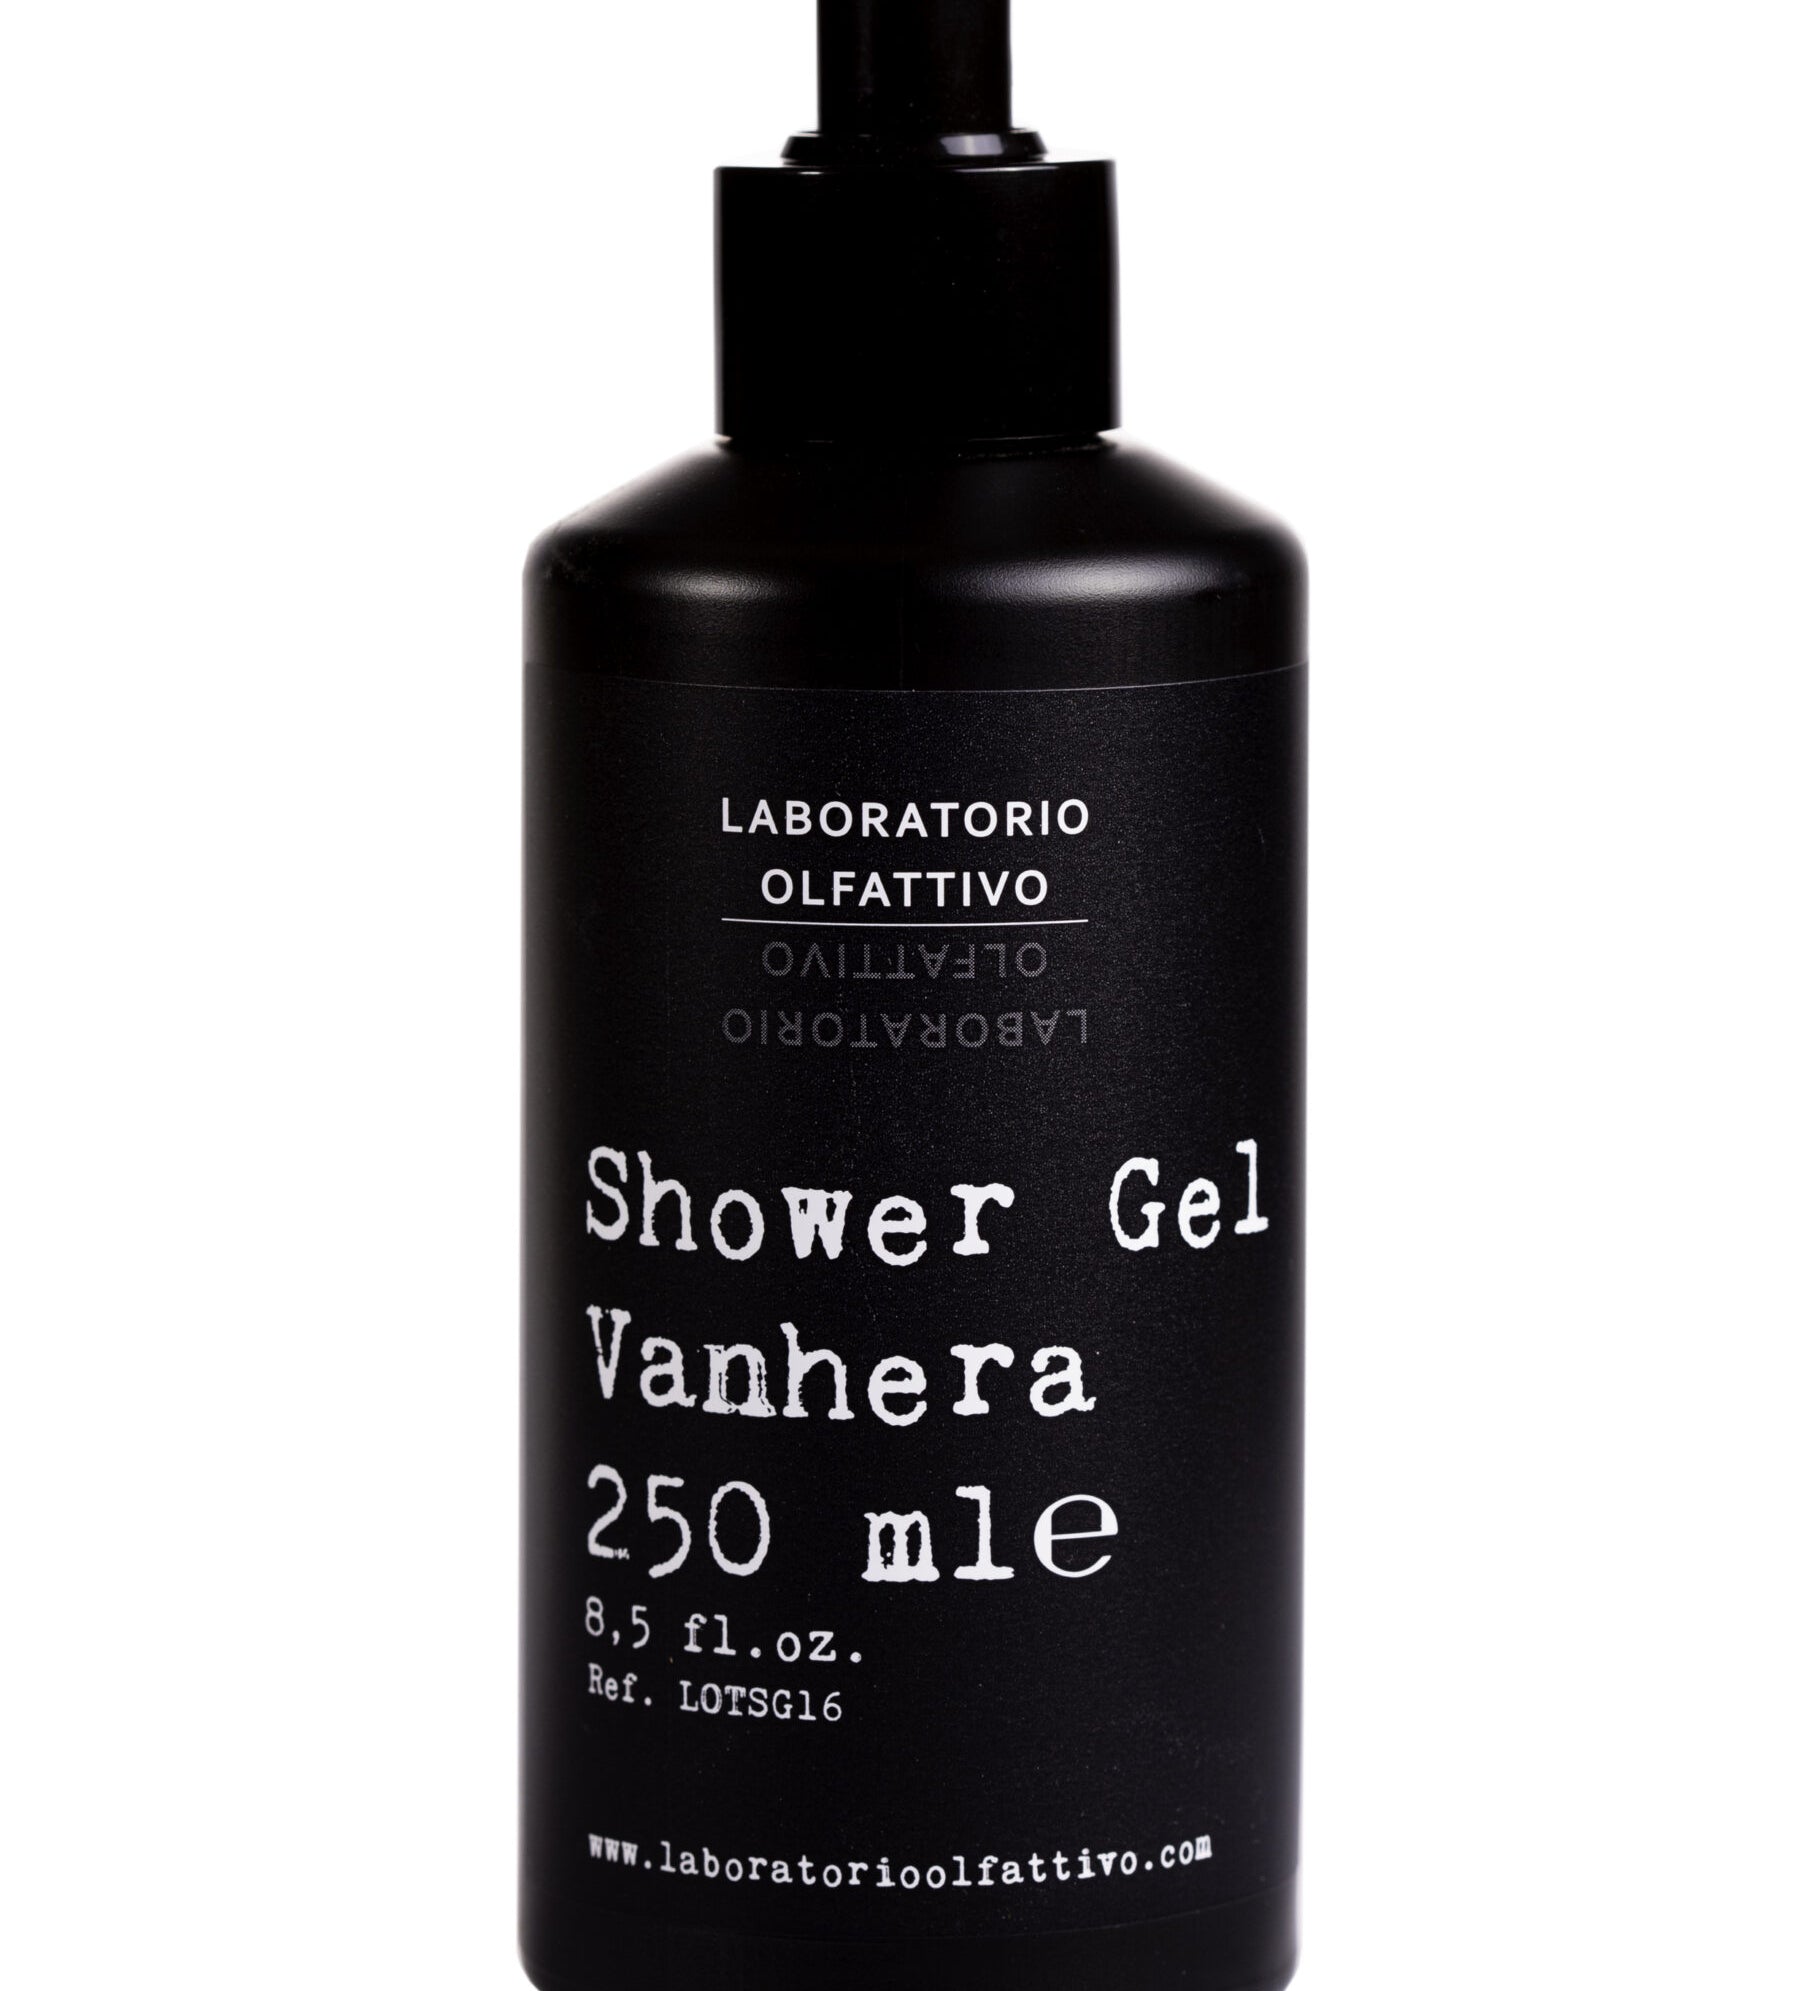 Shower-gel-Vanhera-scaled.jpg